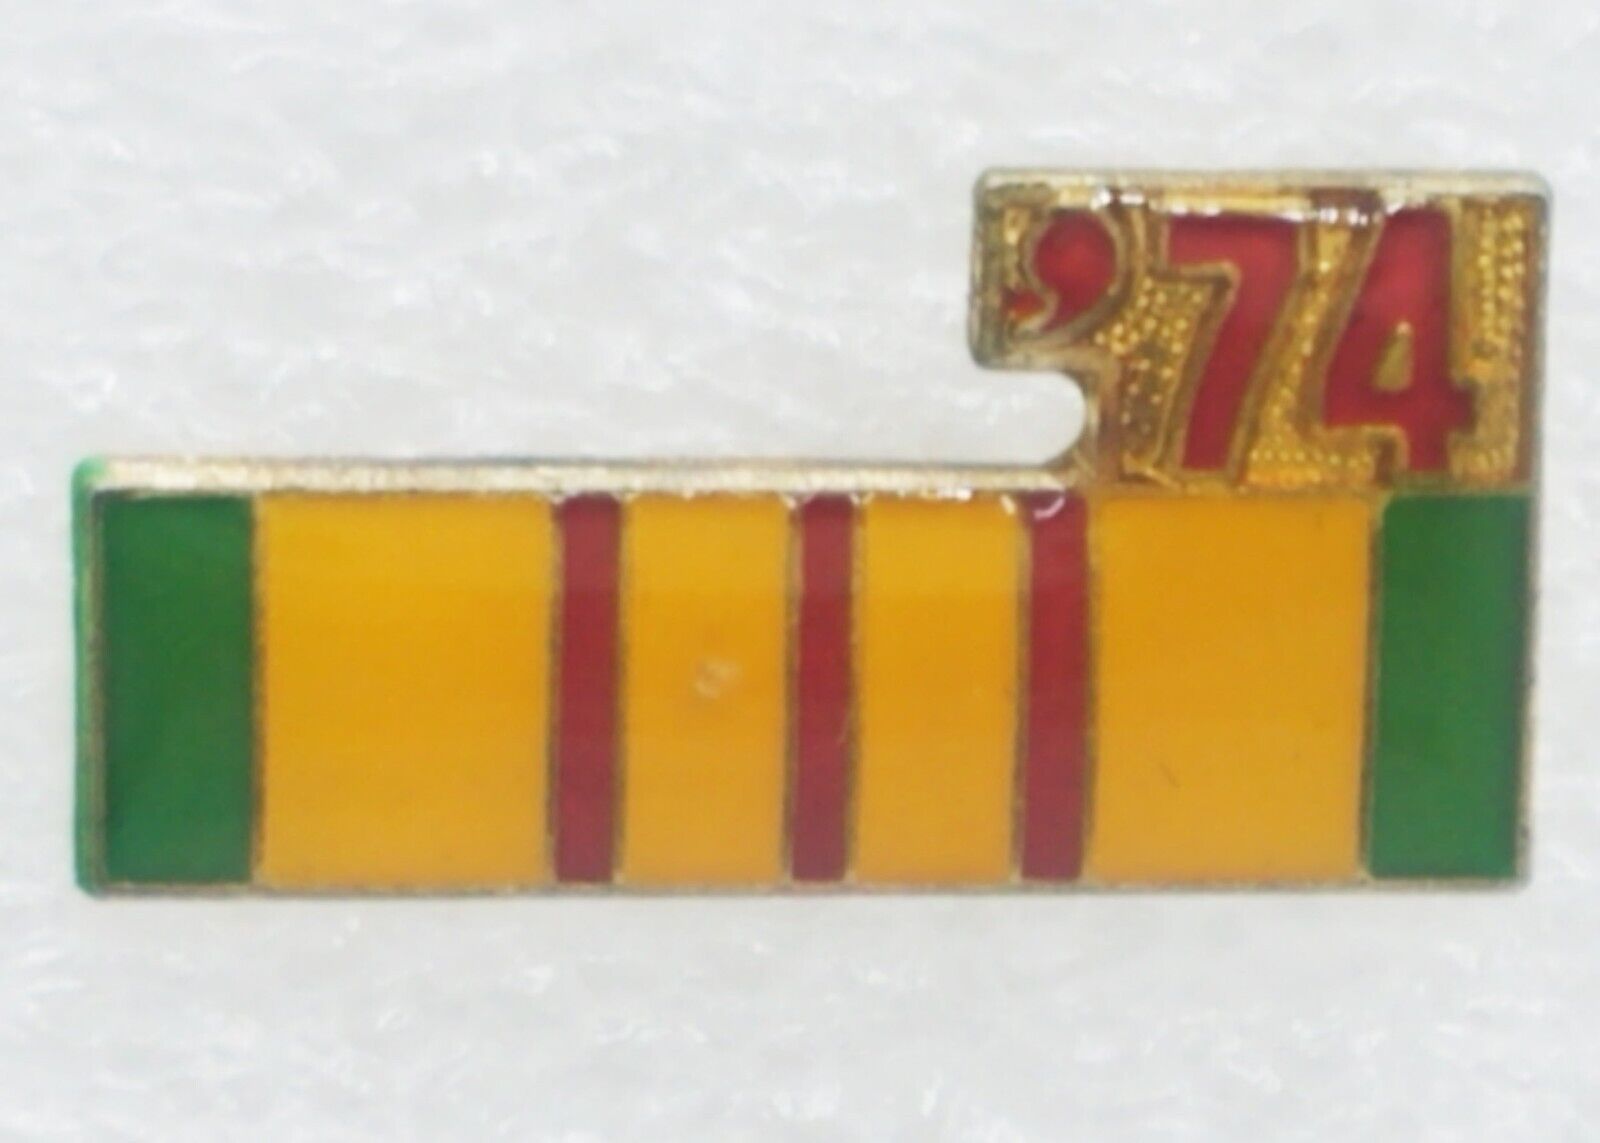 1974 Vietnam Service Ribbon Pin (metal base) Collectible - 2 Left